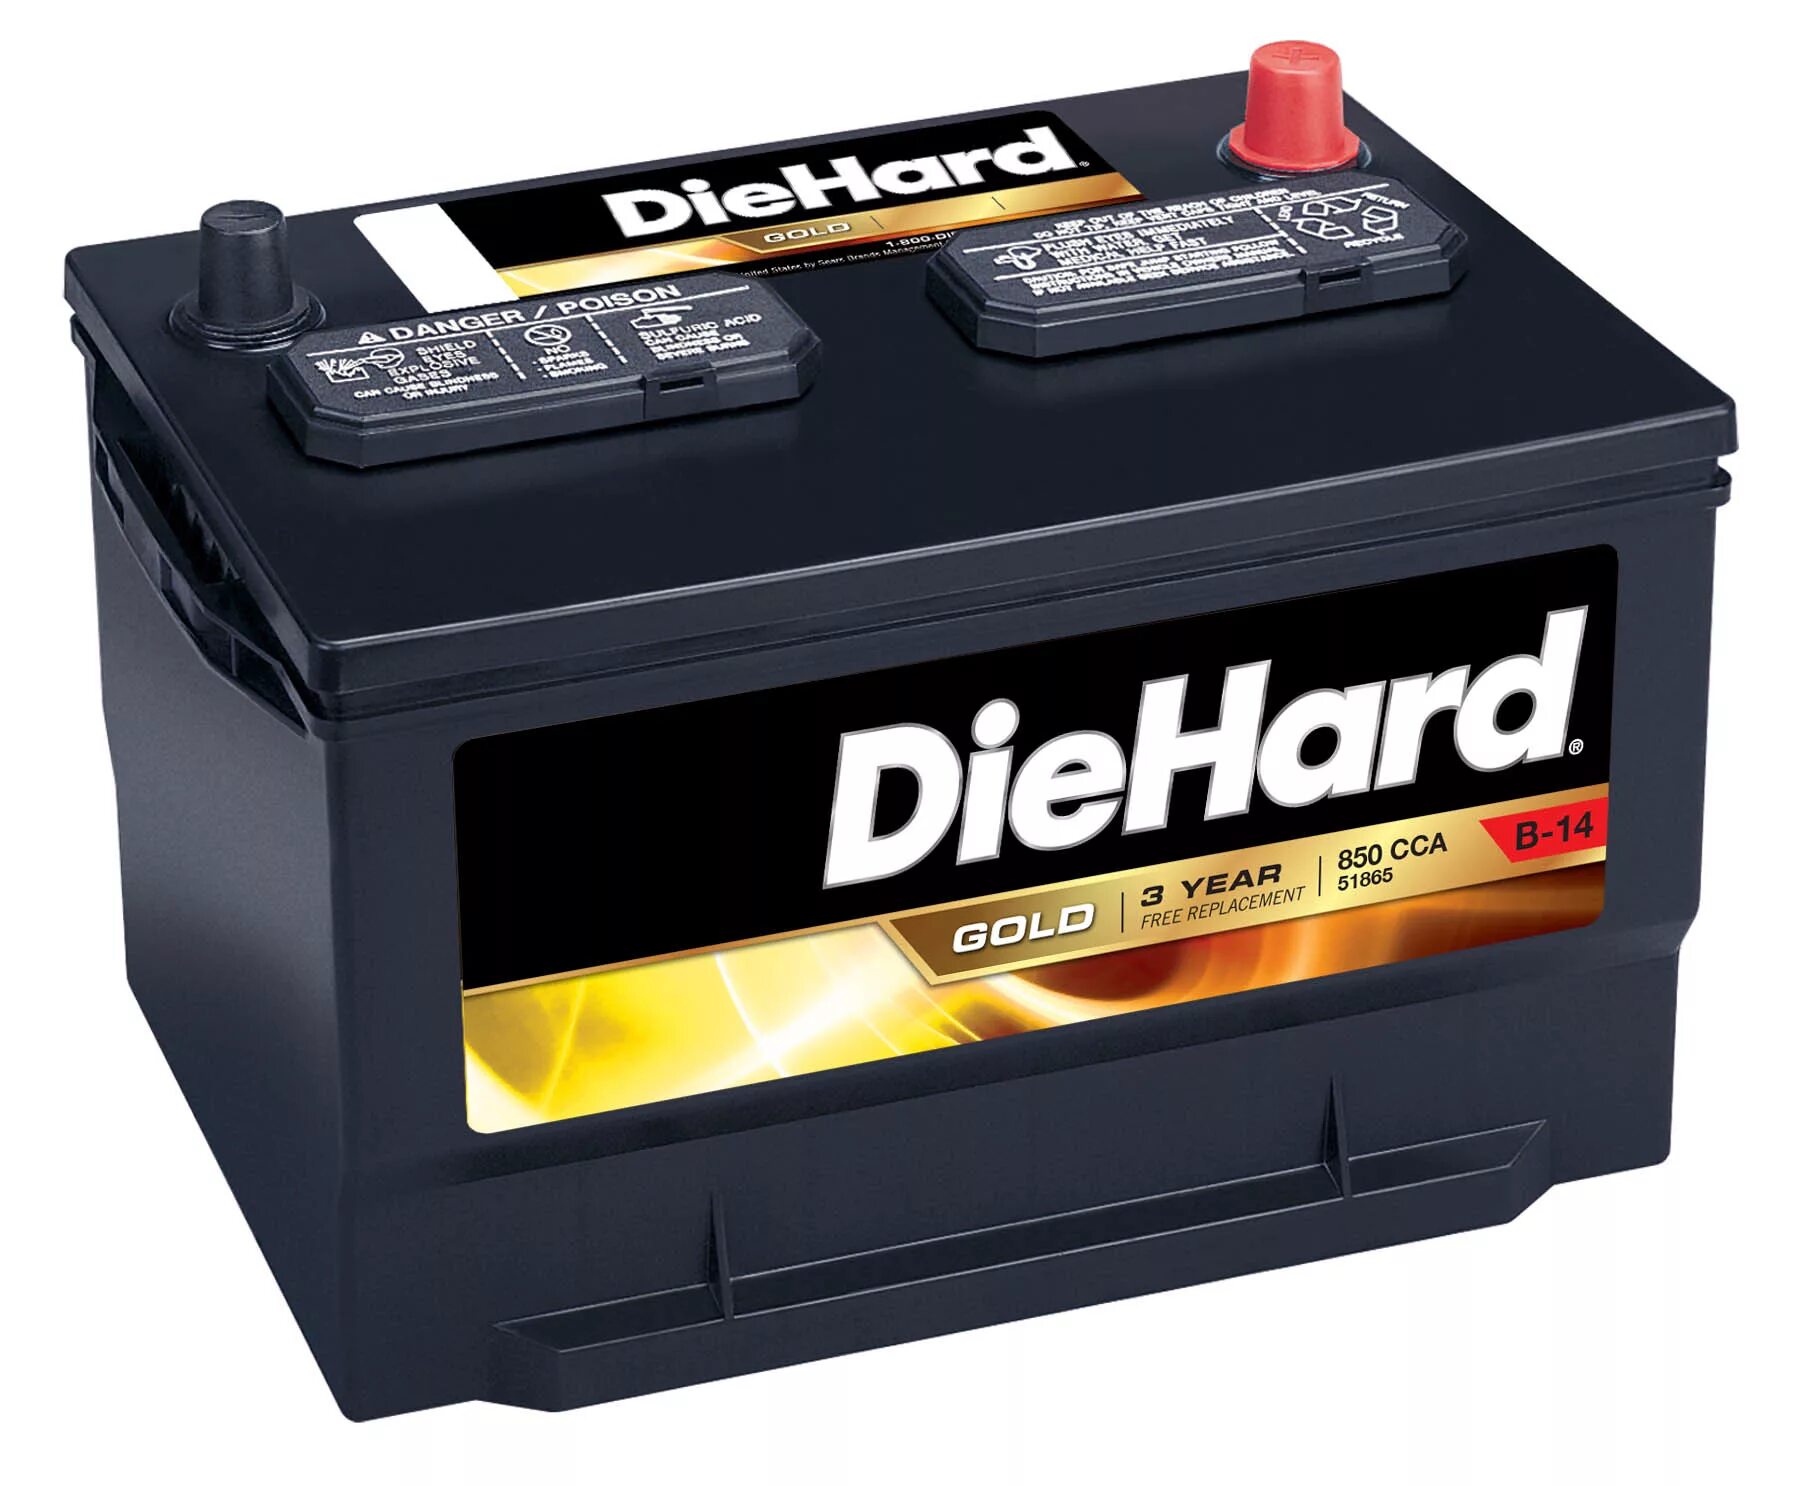 Diehard аккумулятор 700 cca. Car Battery. Gold Battery. Аккумулятор diehard на автомобиль Silver.